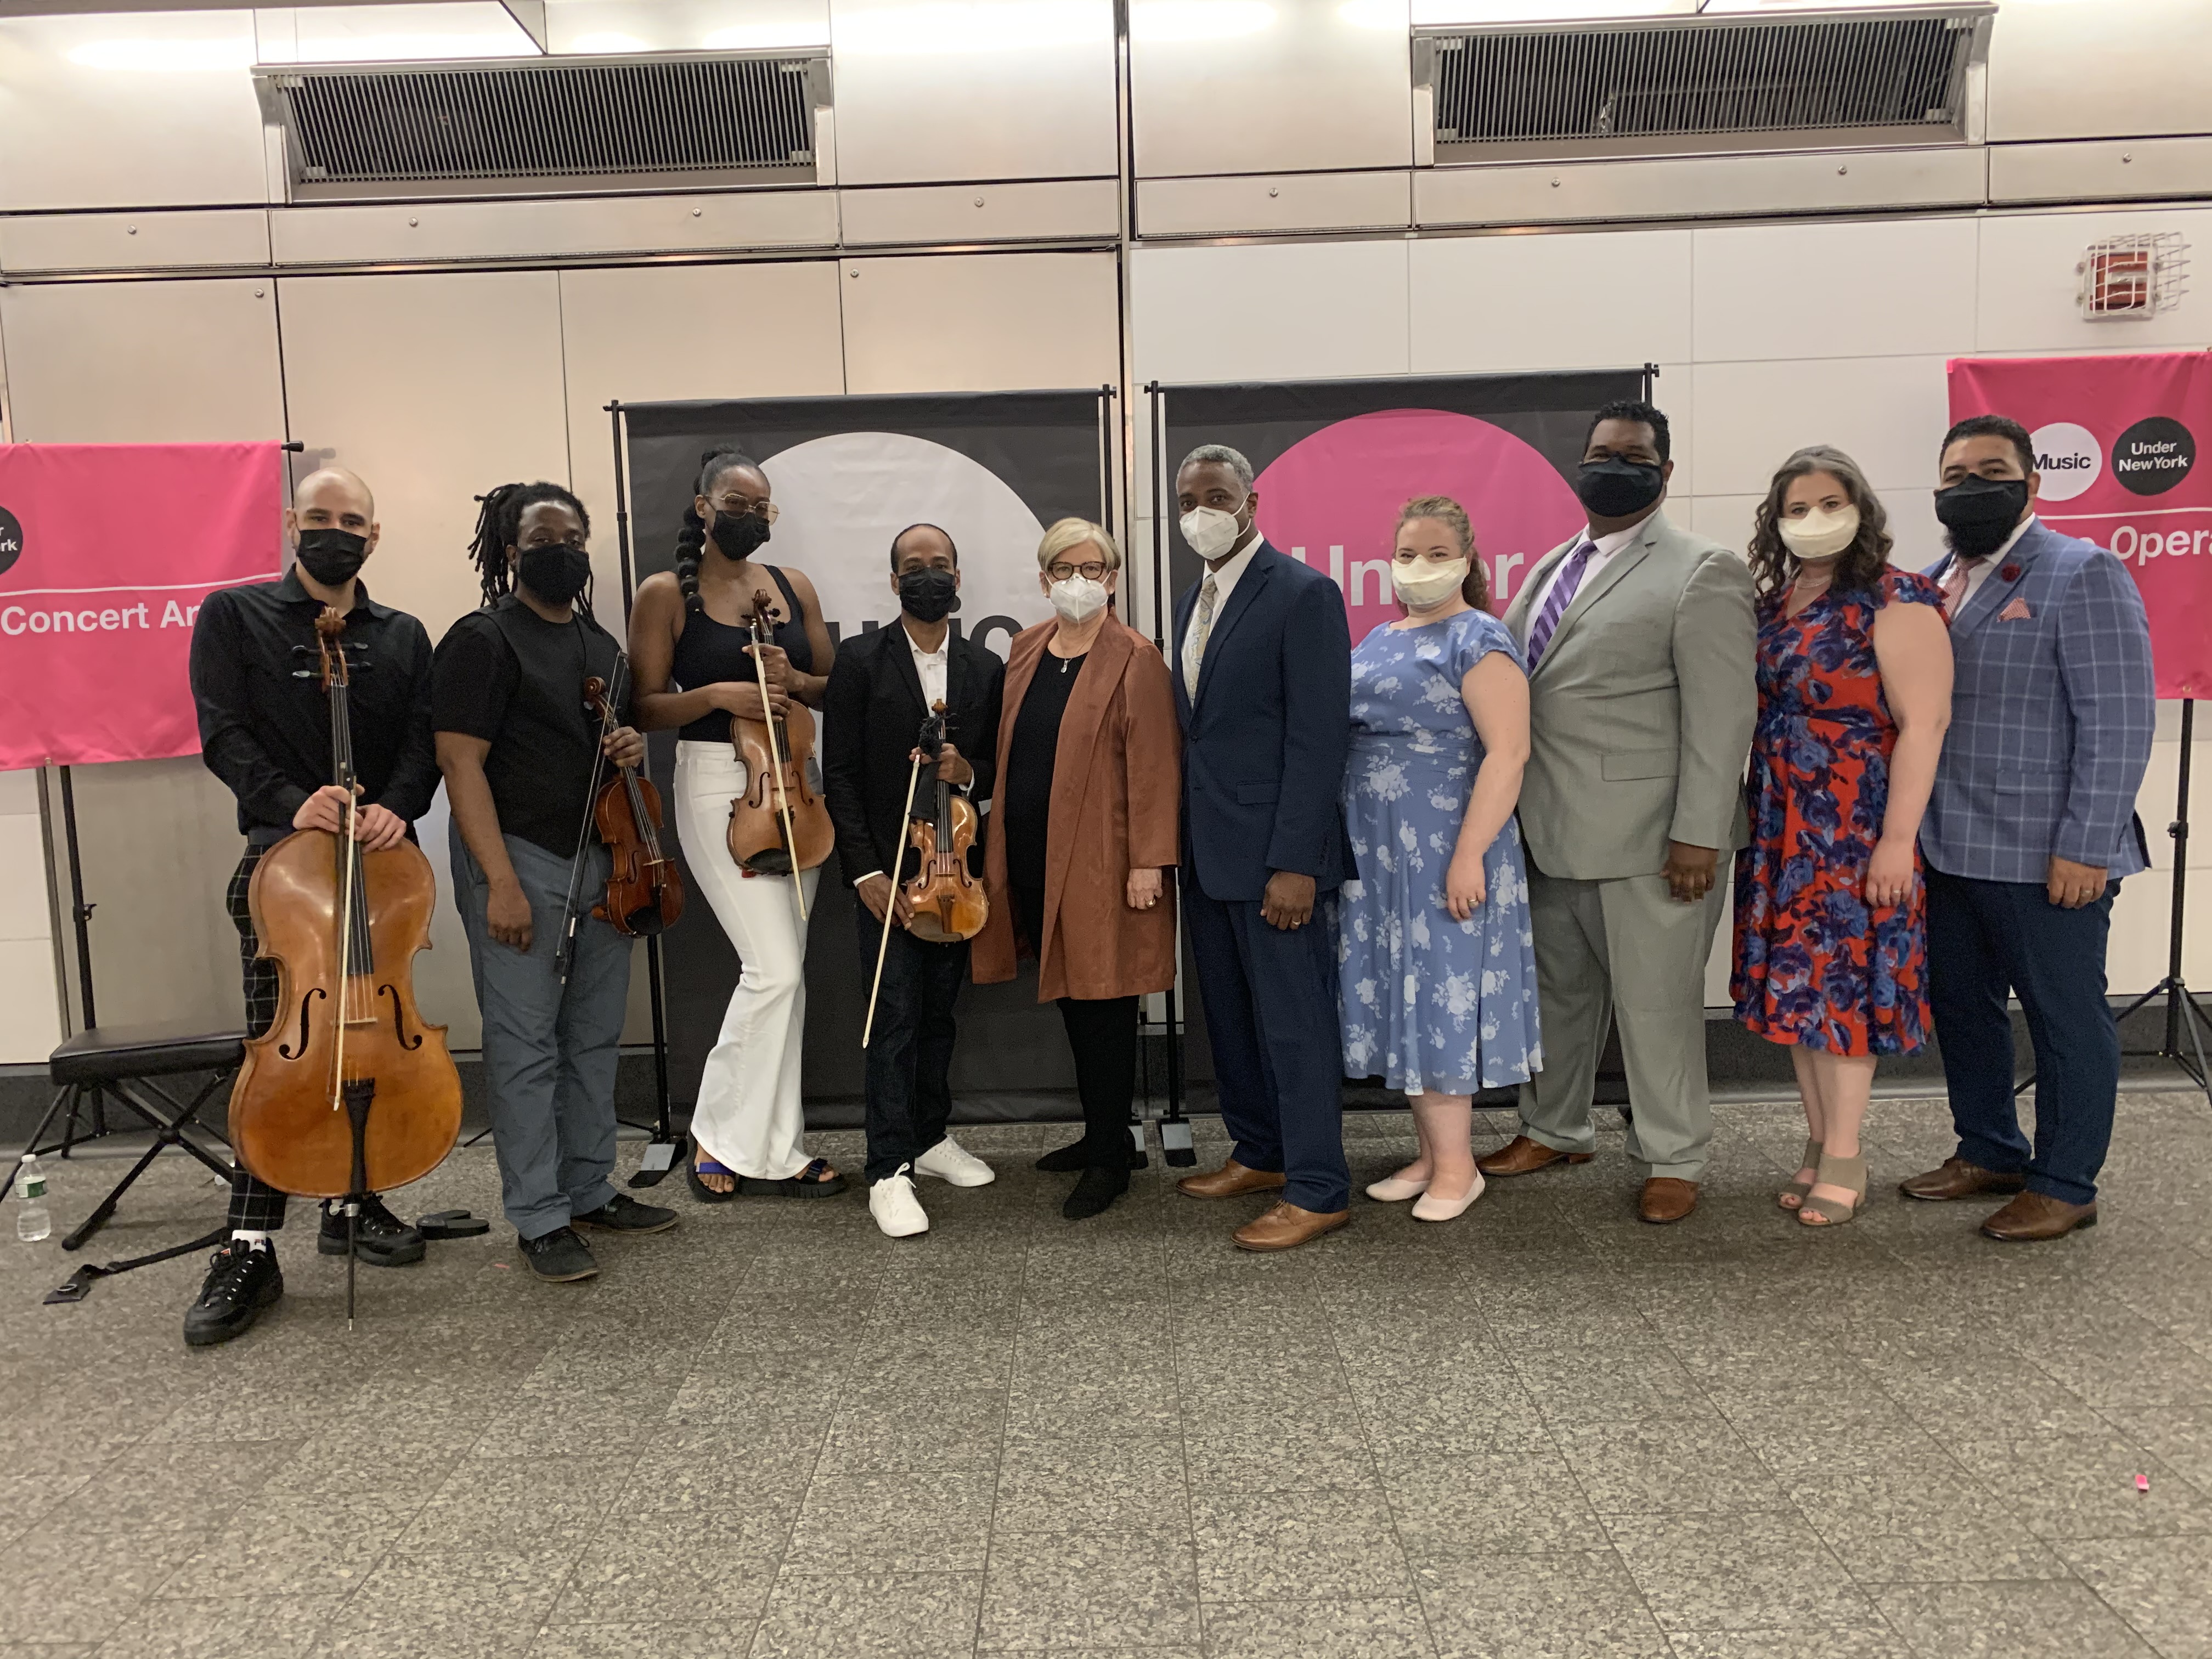 MTA Announces Return of Music Under New York Program to Subway System